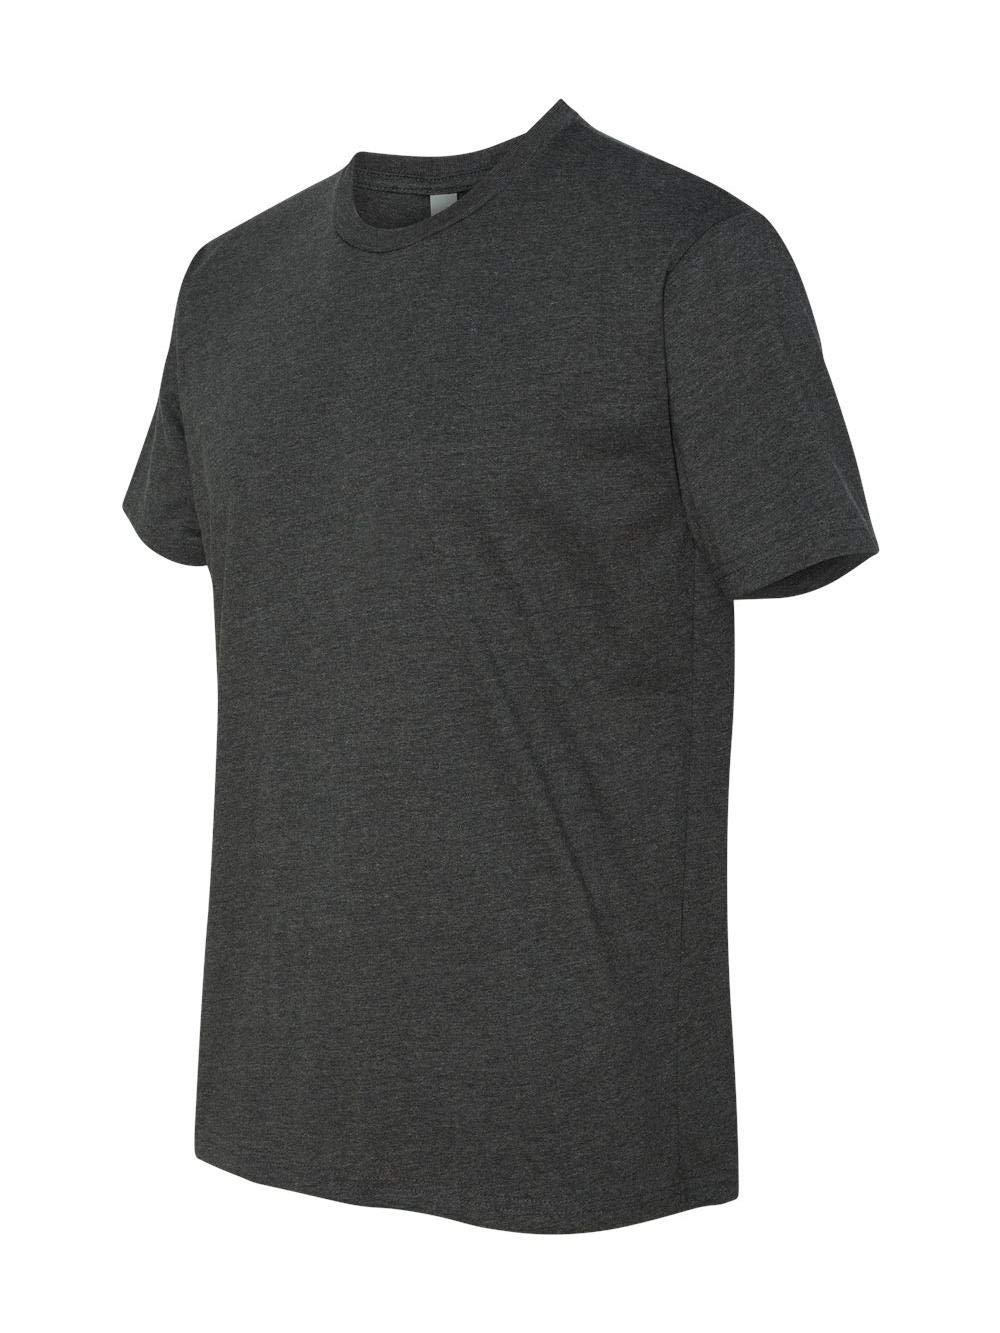 Next Level N6210 T-Shirt - Charcoal - Large